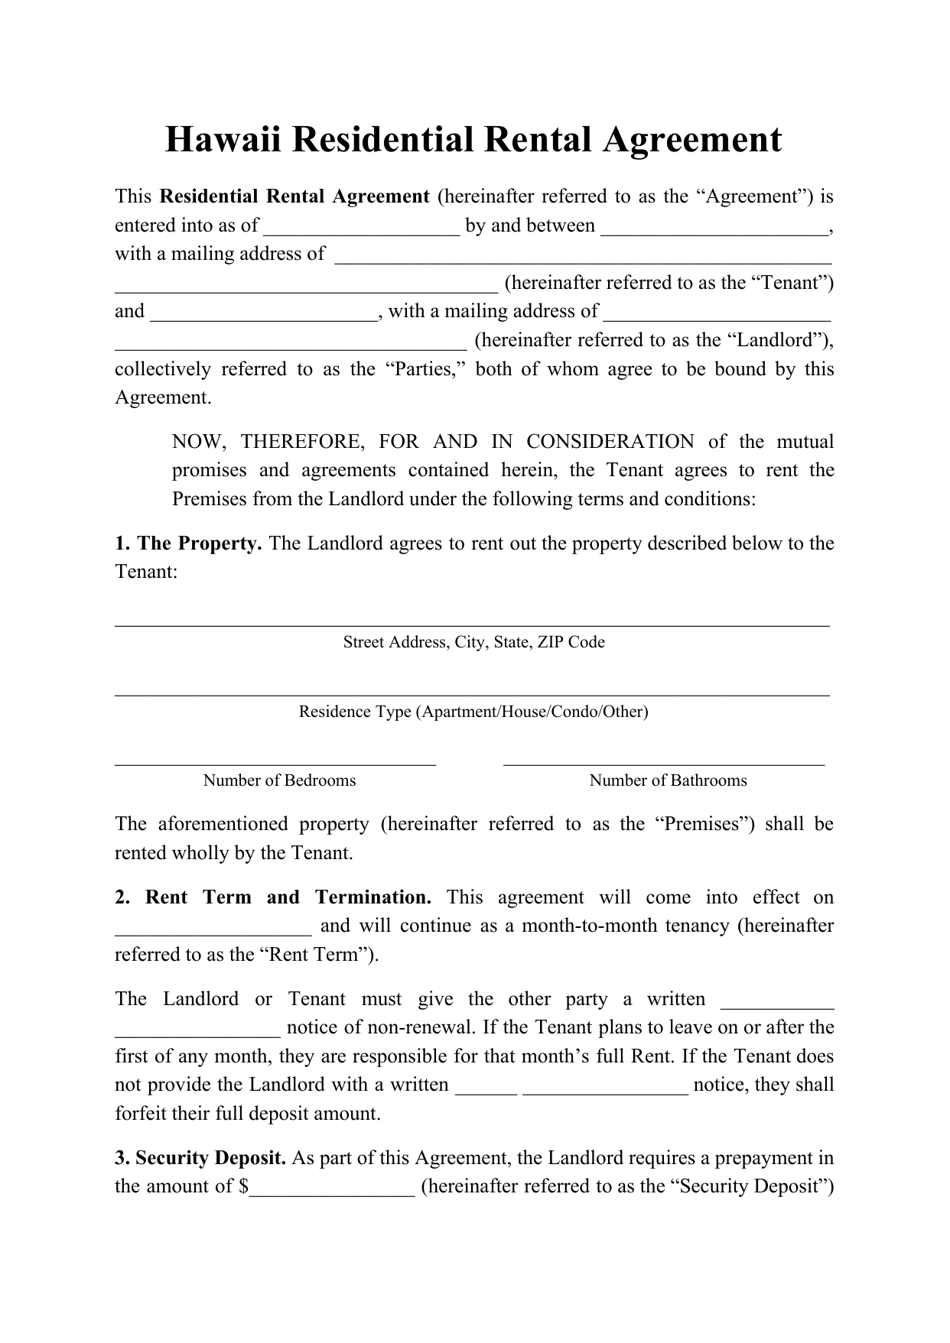 hawaii-residential-rental-agreement-template-download-printable-pdf